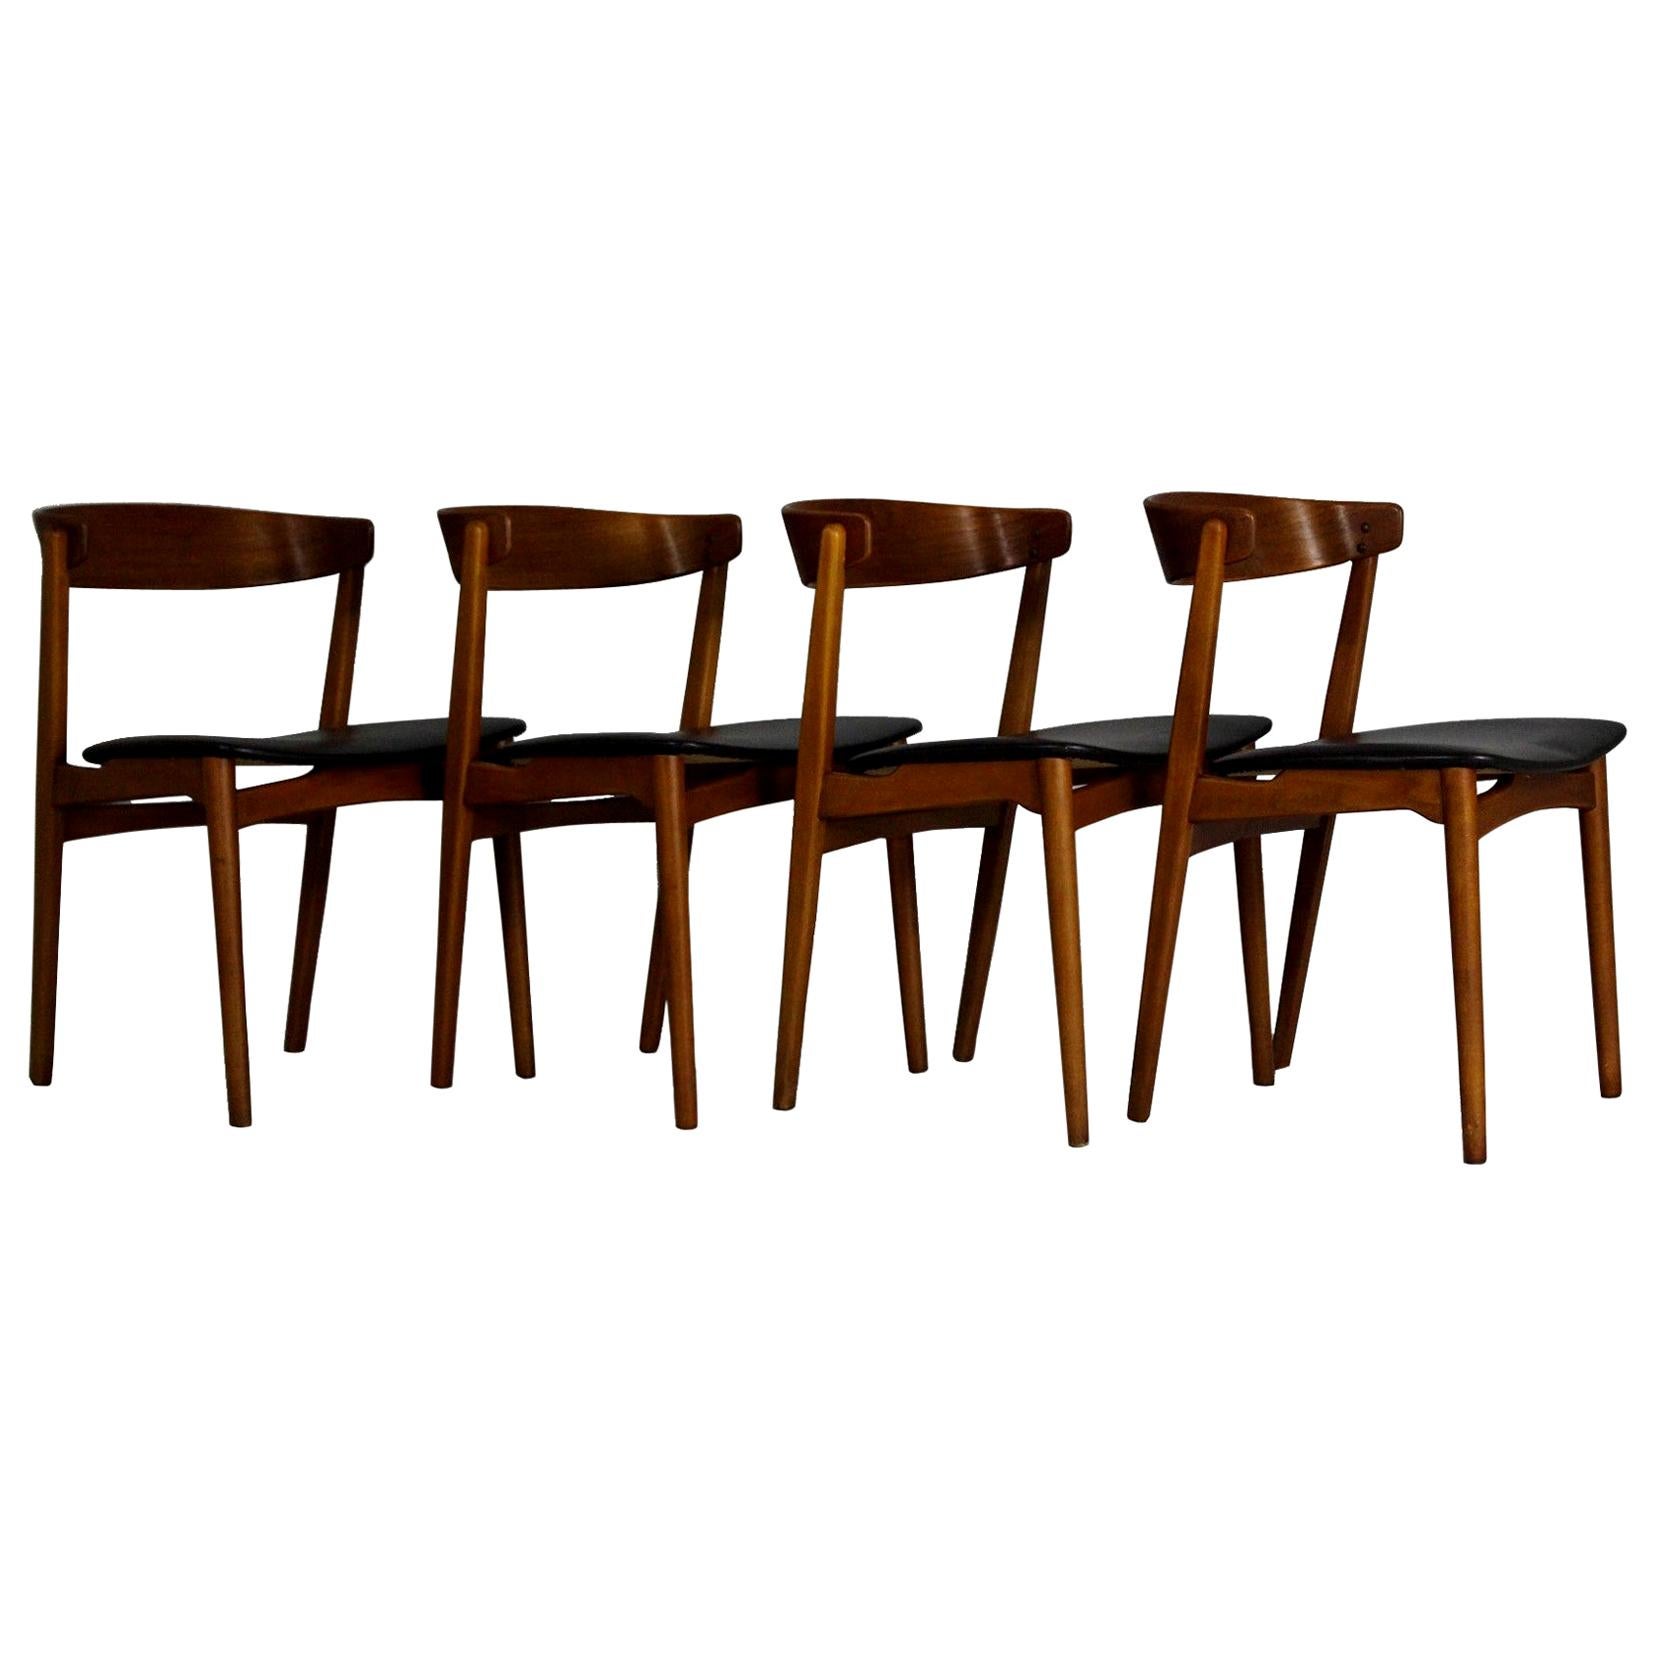 1960s Set of Four Teak Dining Chairs, Denmark